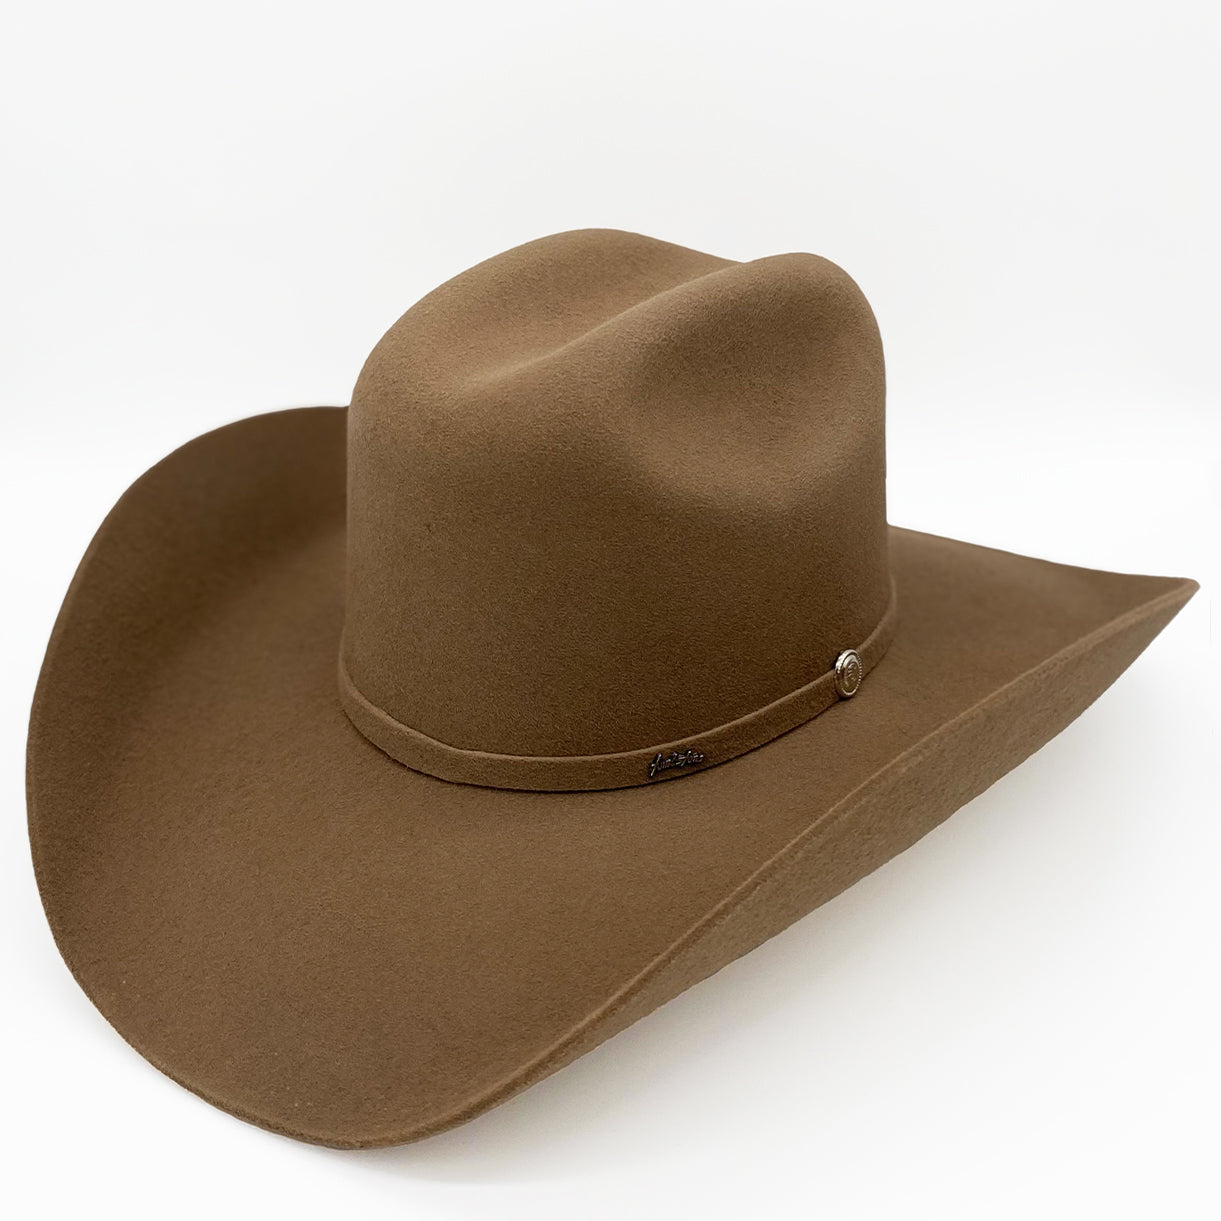 Tombstone nutria felt cowboy hat